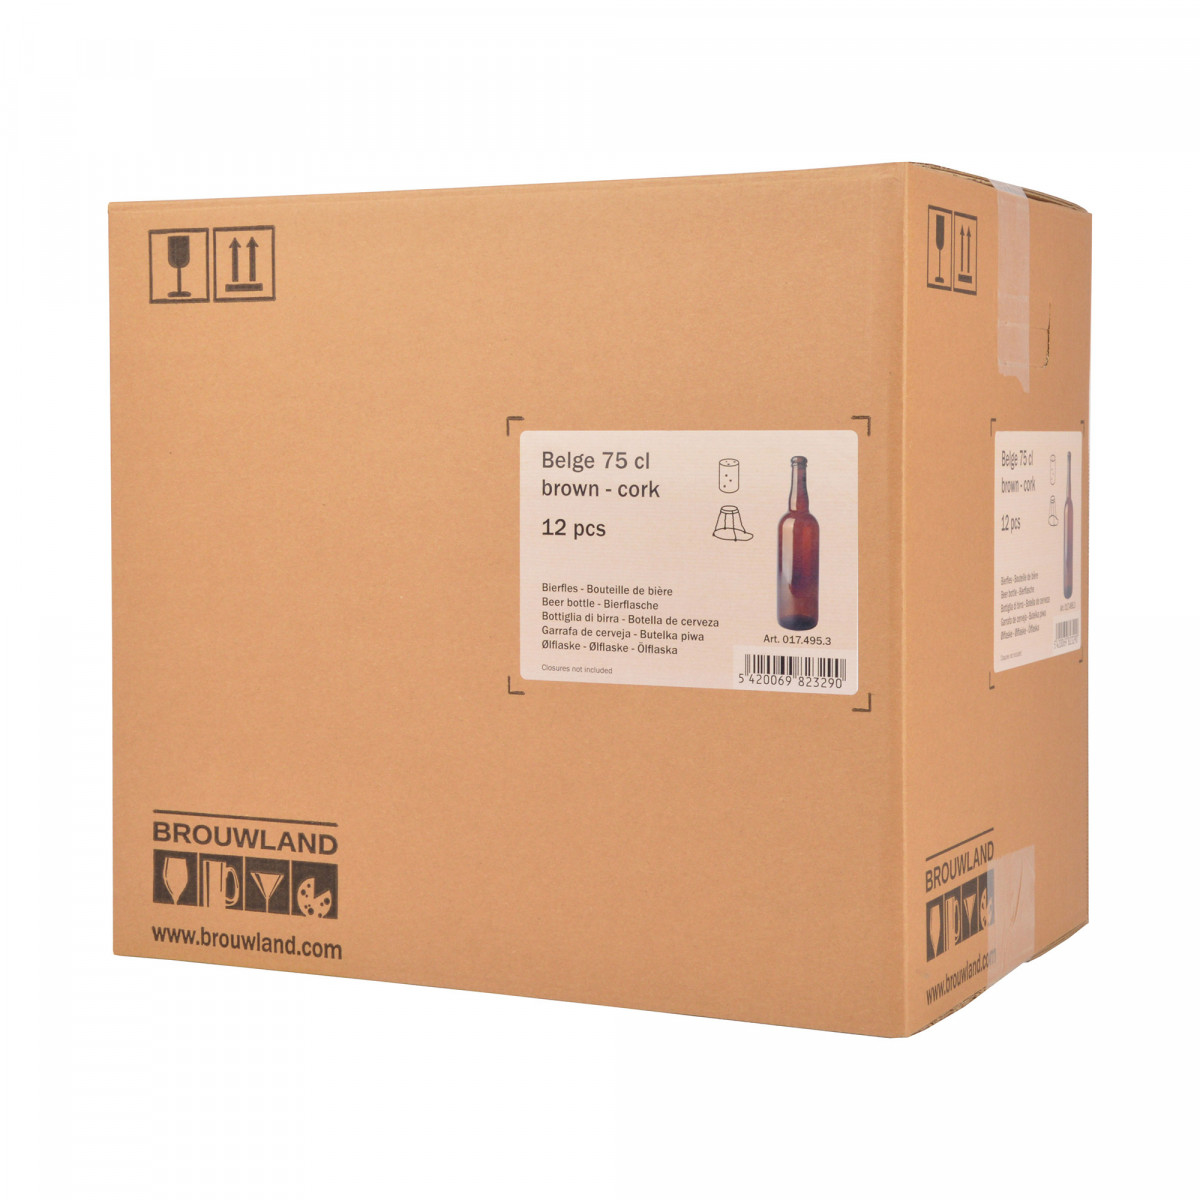 Beer bottle Belge 75 cl, brown, cork, box 12 pcs